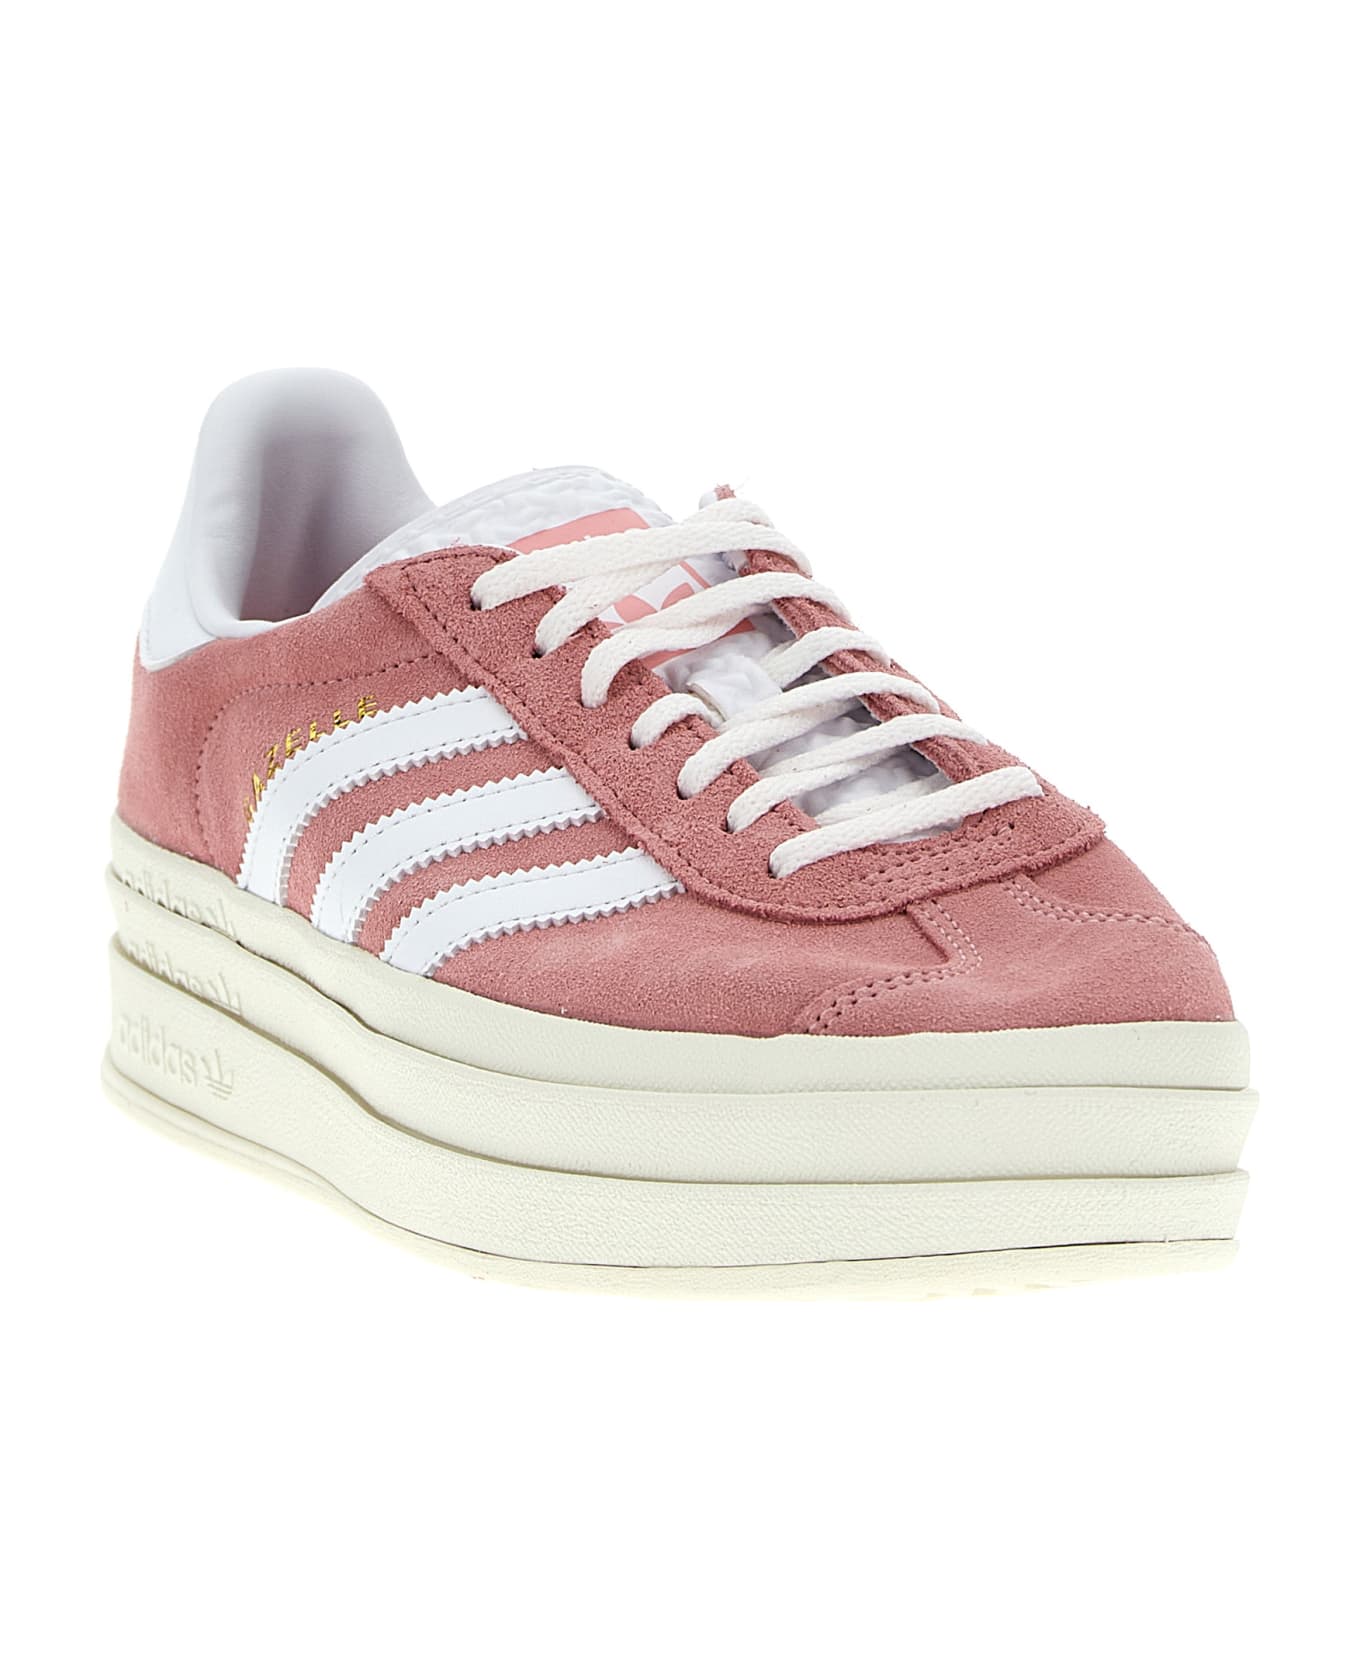 Adidas Originals 'gazelle Bold' Sneakers - Pink ウェッジシューズ